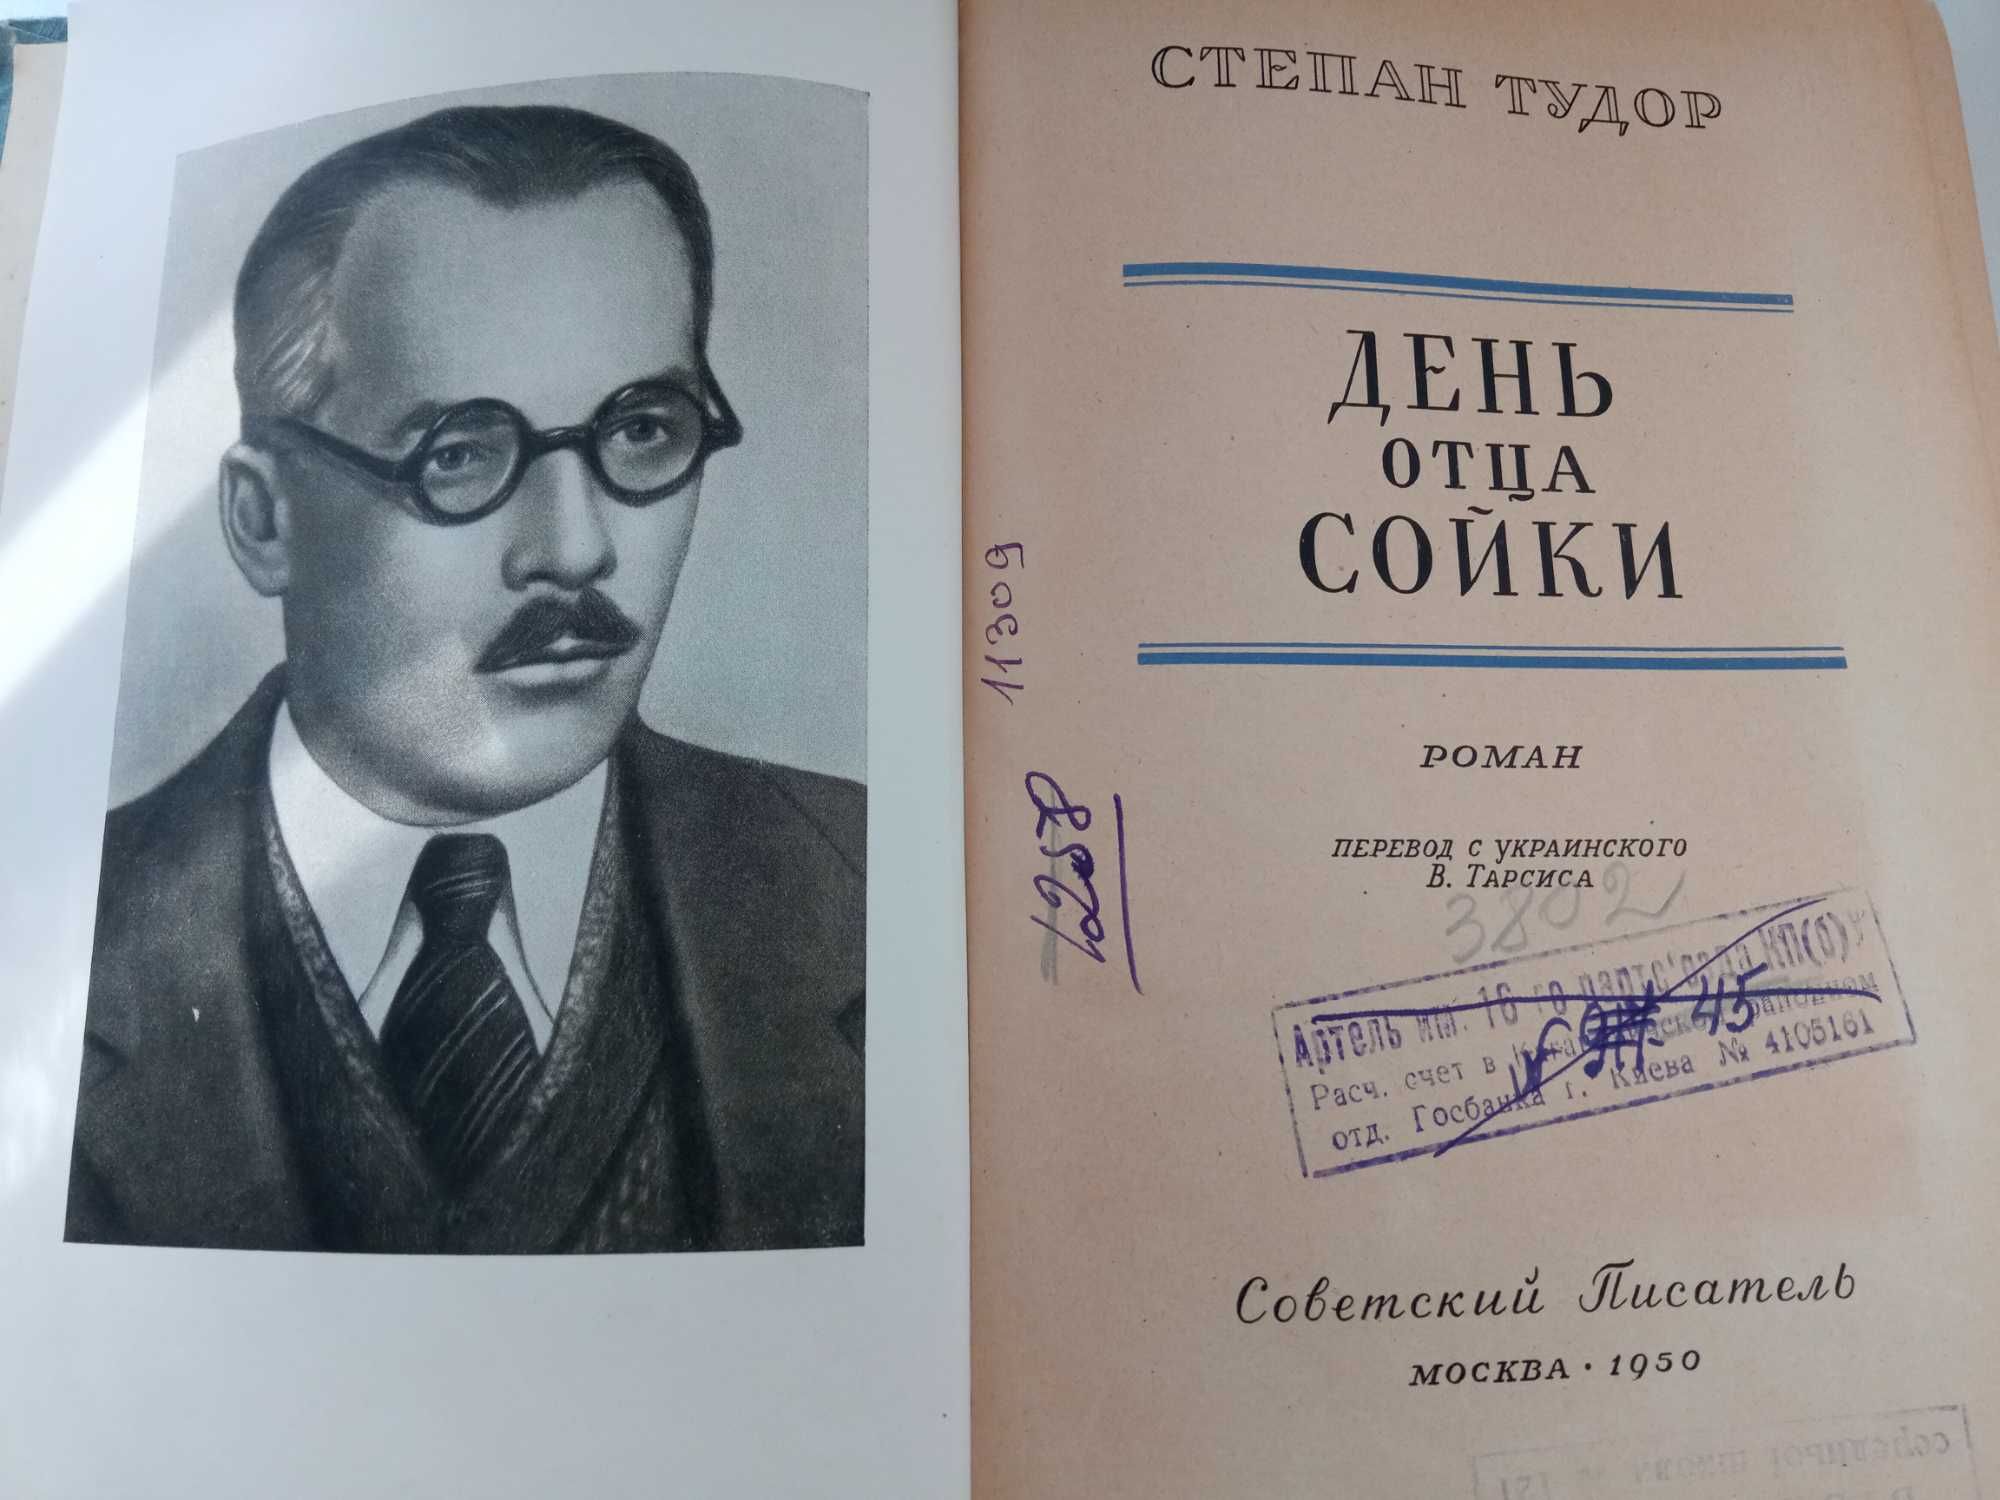 Книги. Степан Тудор. Иван Микитенко. 1950. 1966 р.